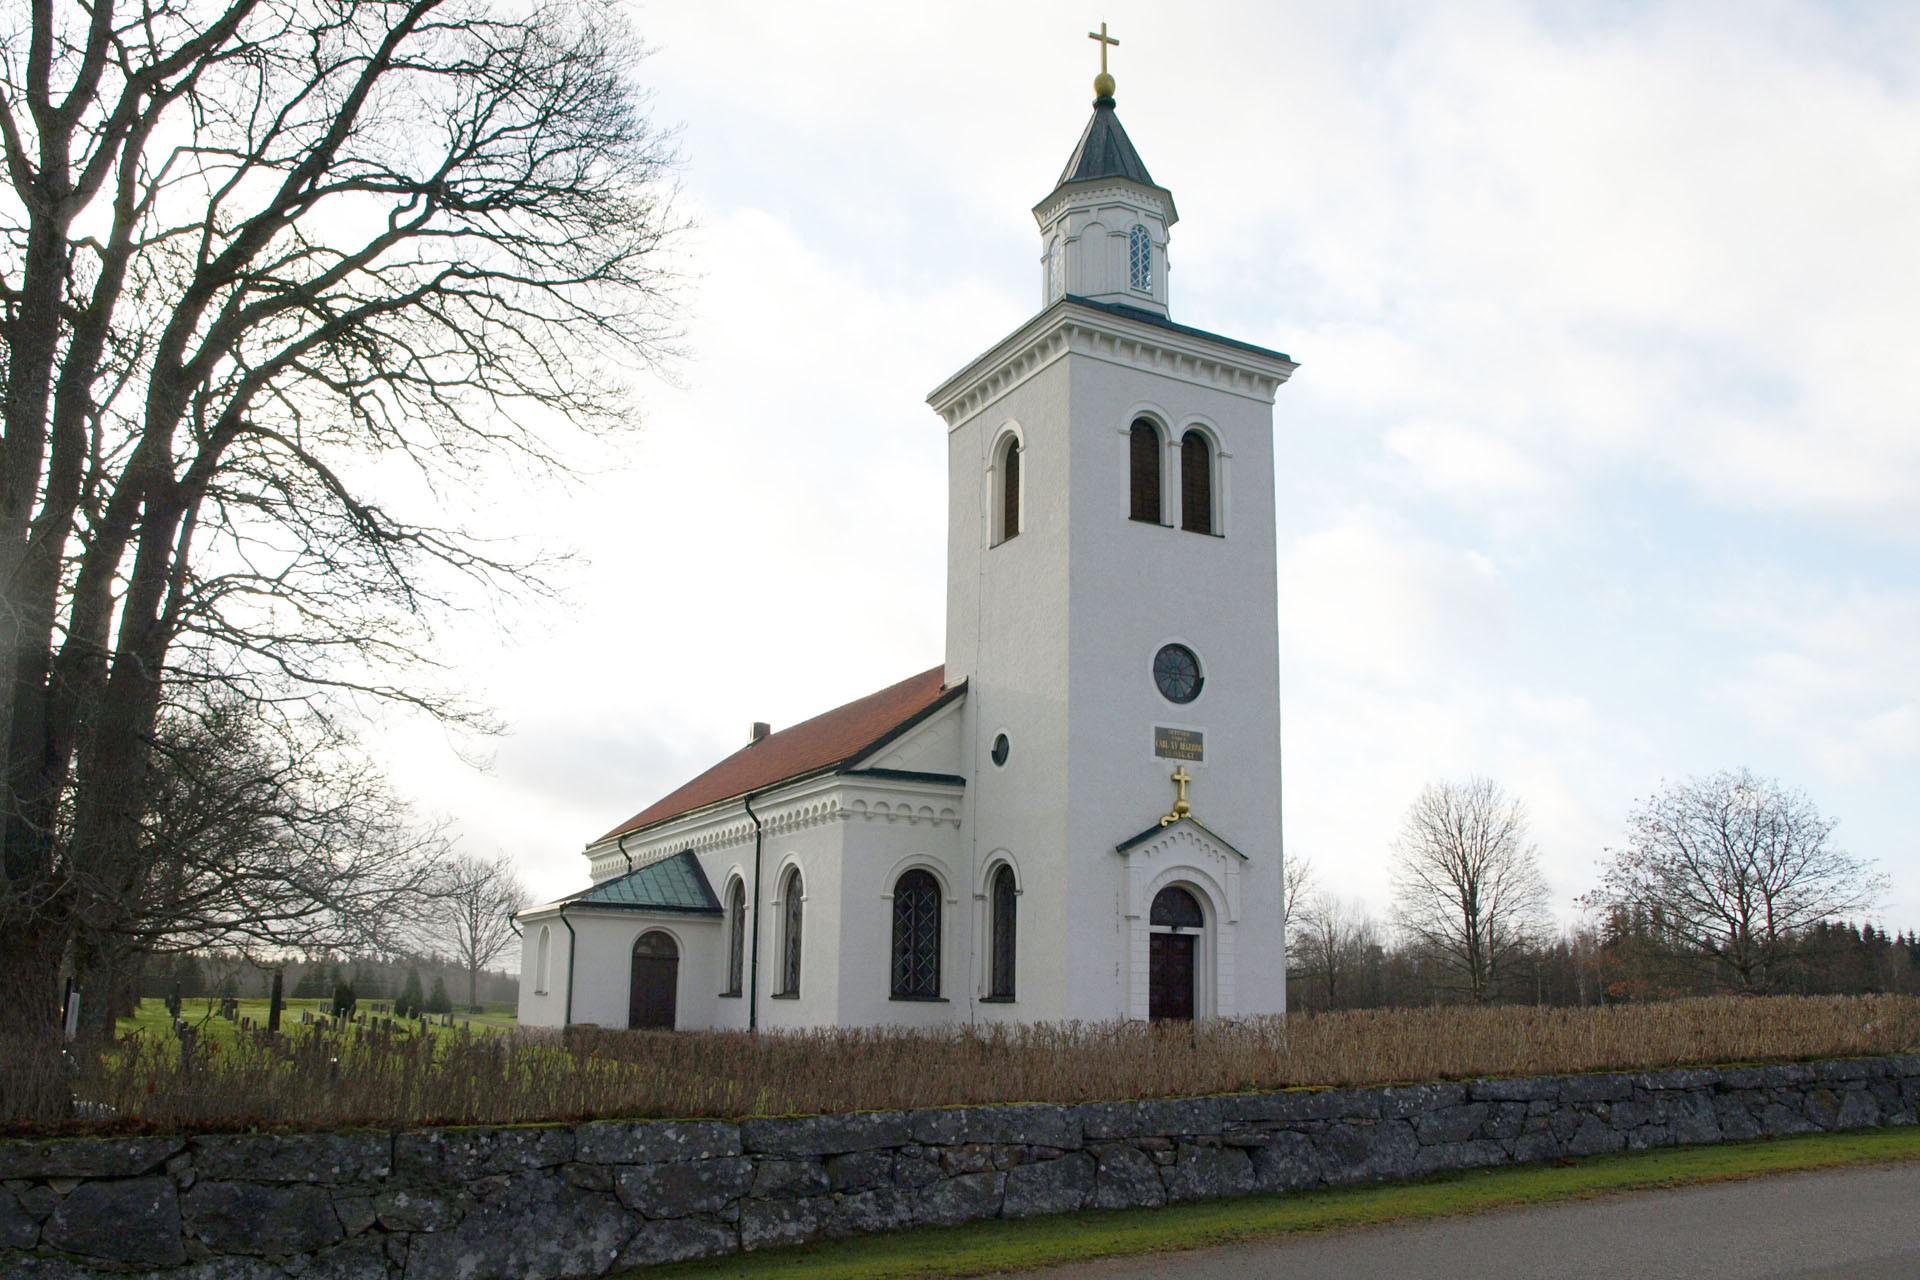 Drev-Hornaryds kyrka